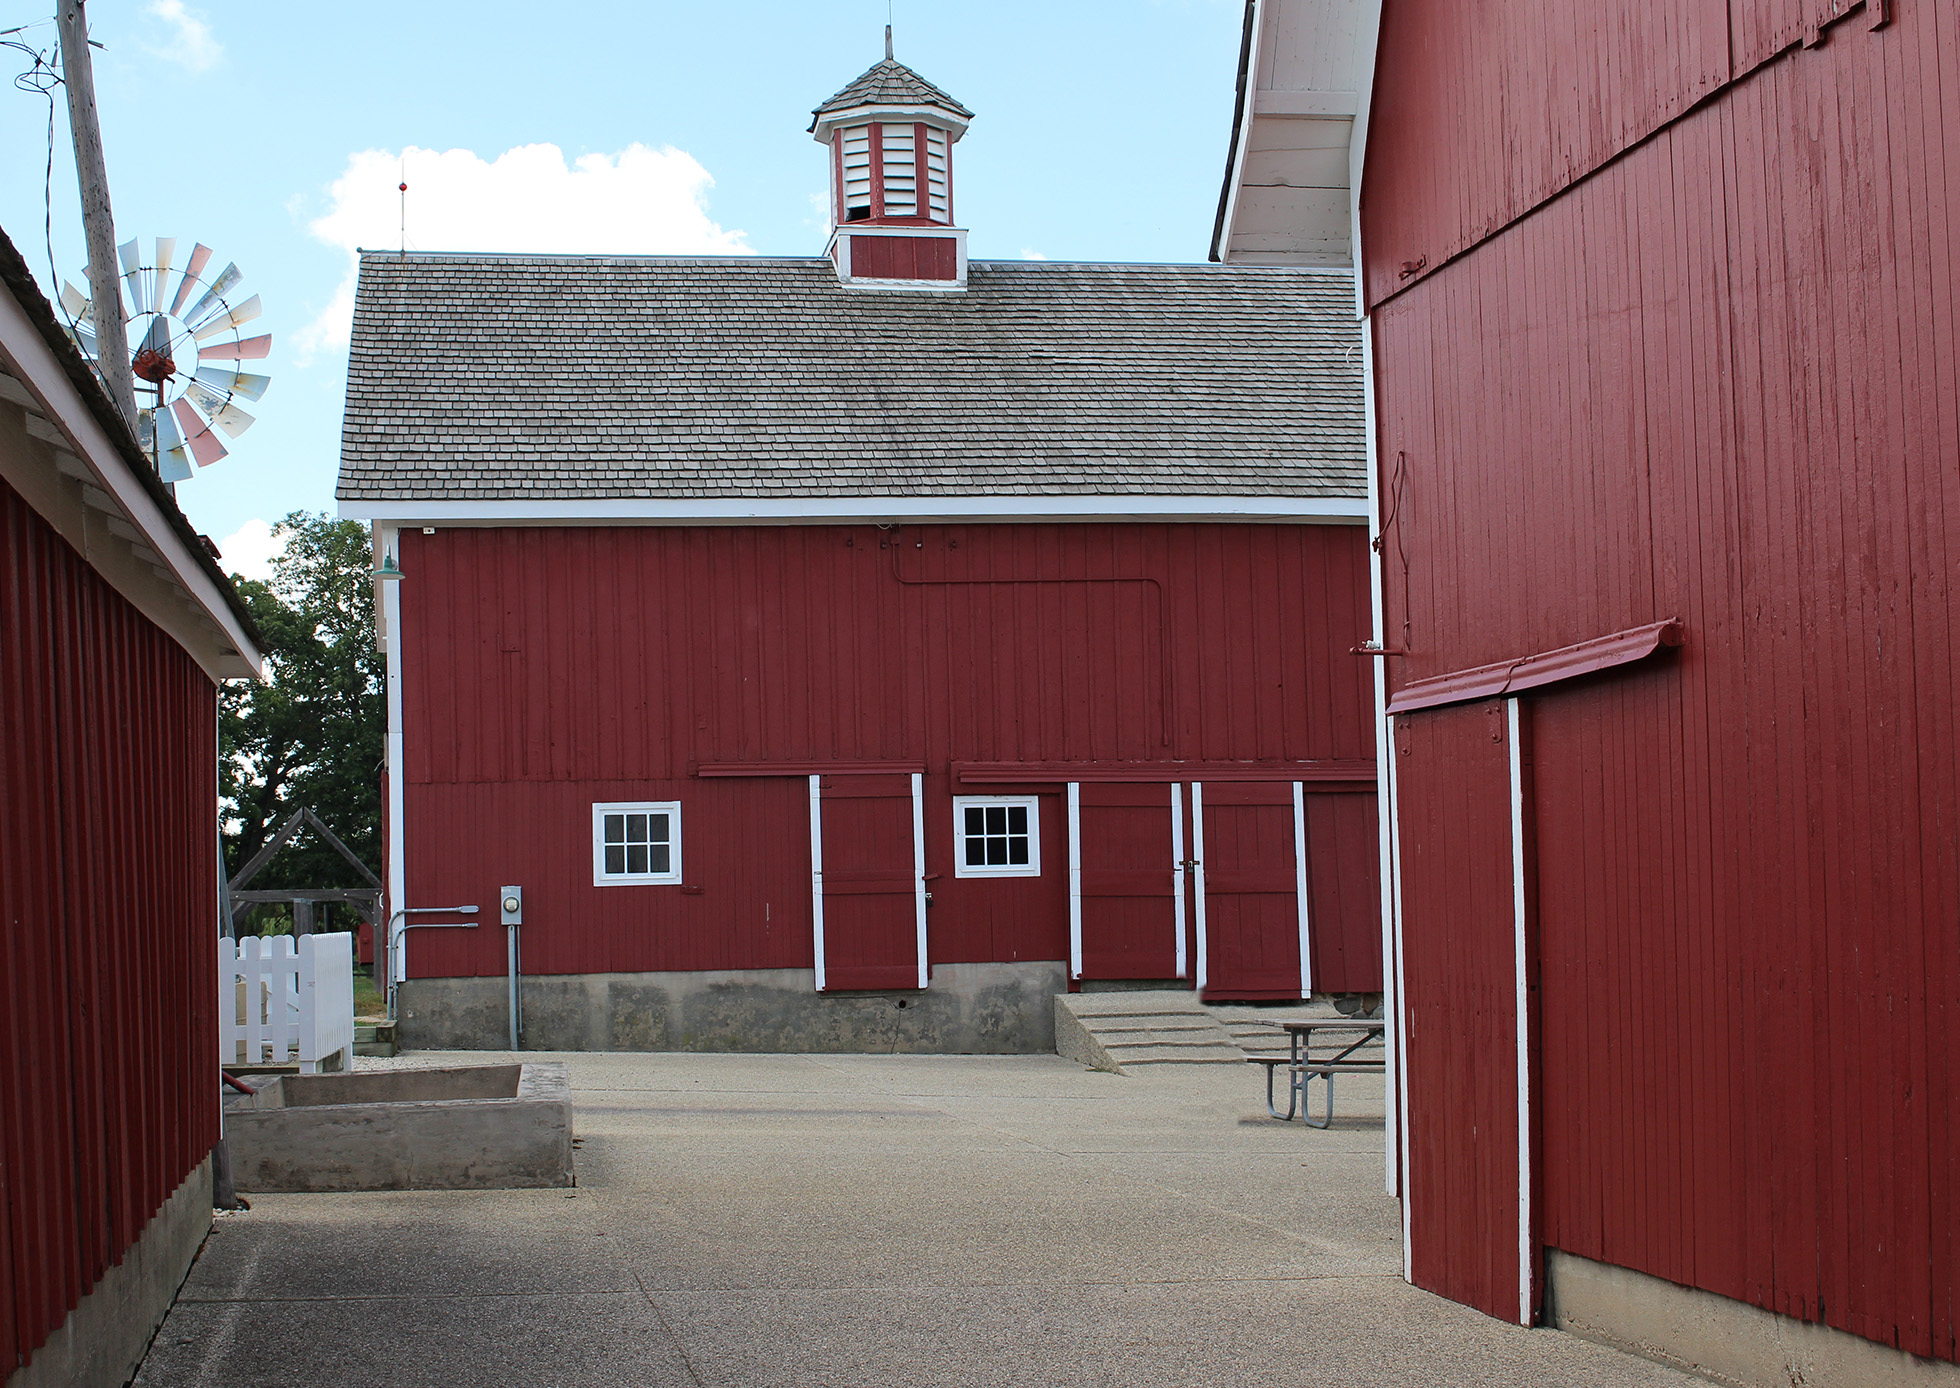 Photo of the historic red barns at Bonner Farm